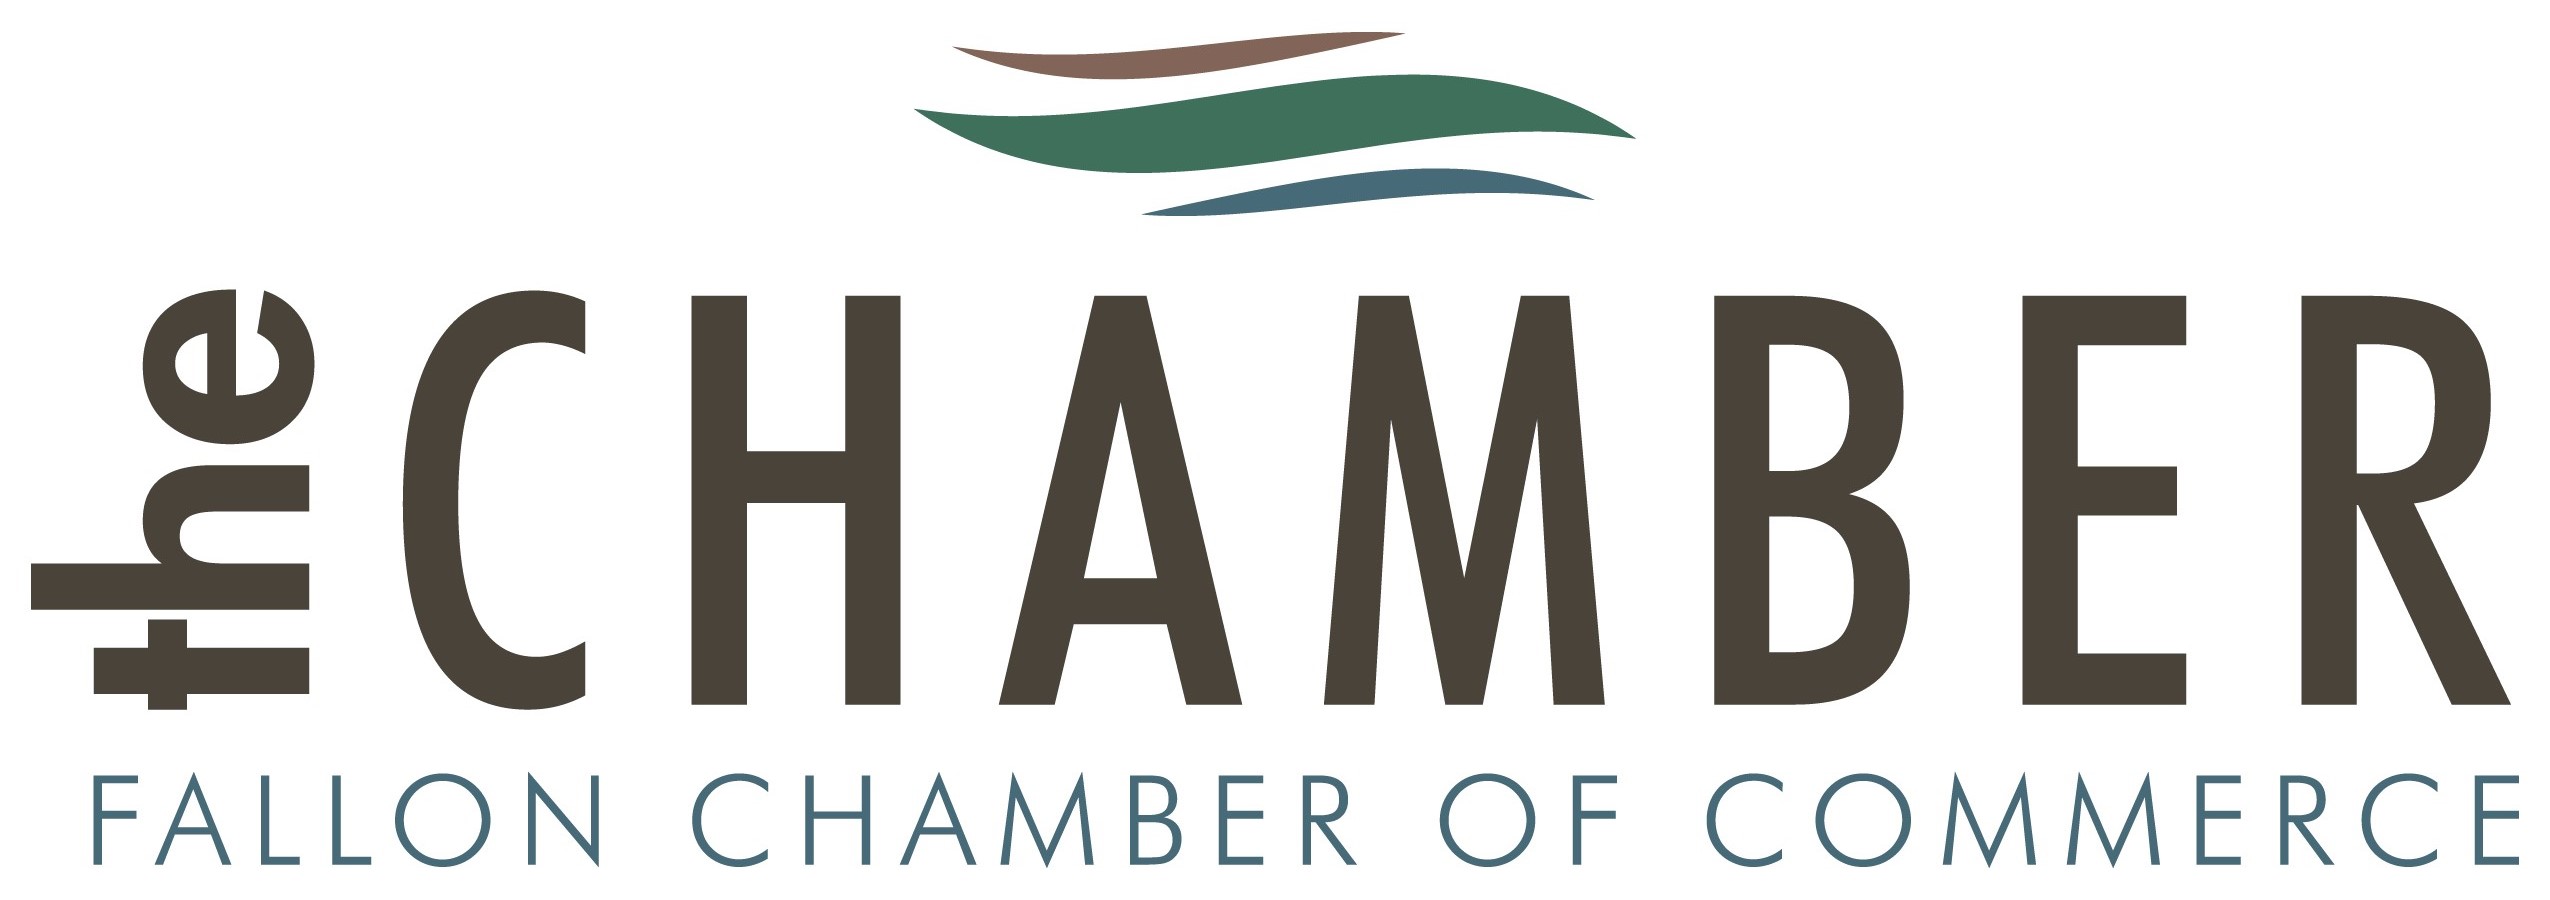 Home - Fallon Chamber of Commerce